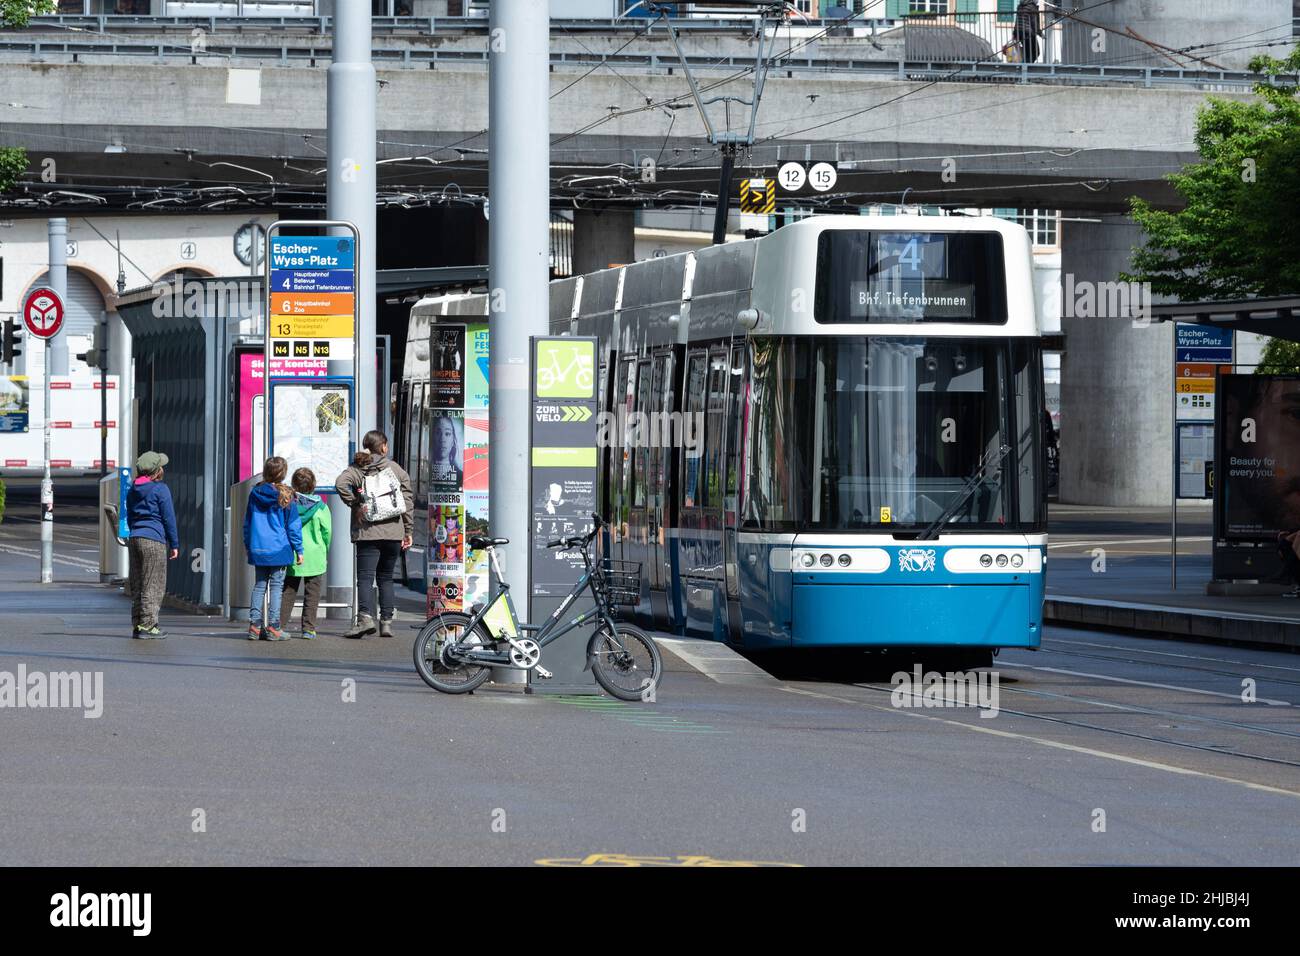 Zürich, Schweiz - Mai 23rd 2021: Ein moderner Straßenbahnwagen Flexity hält am Escher-Wyss-Platz Stockfoto